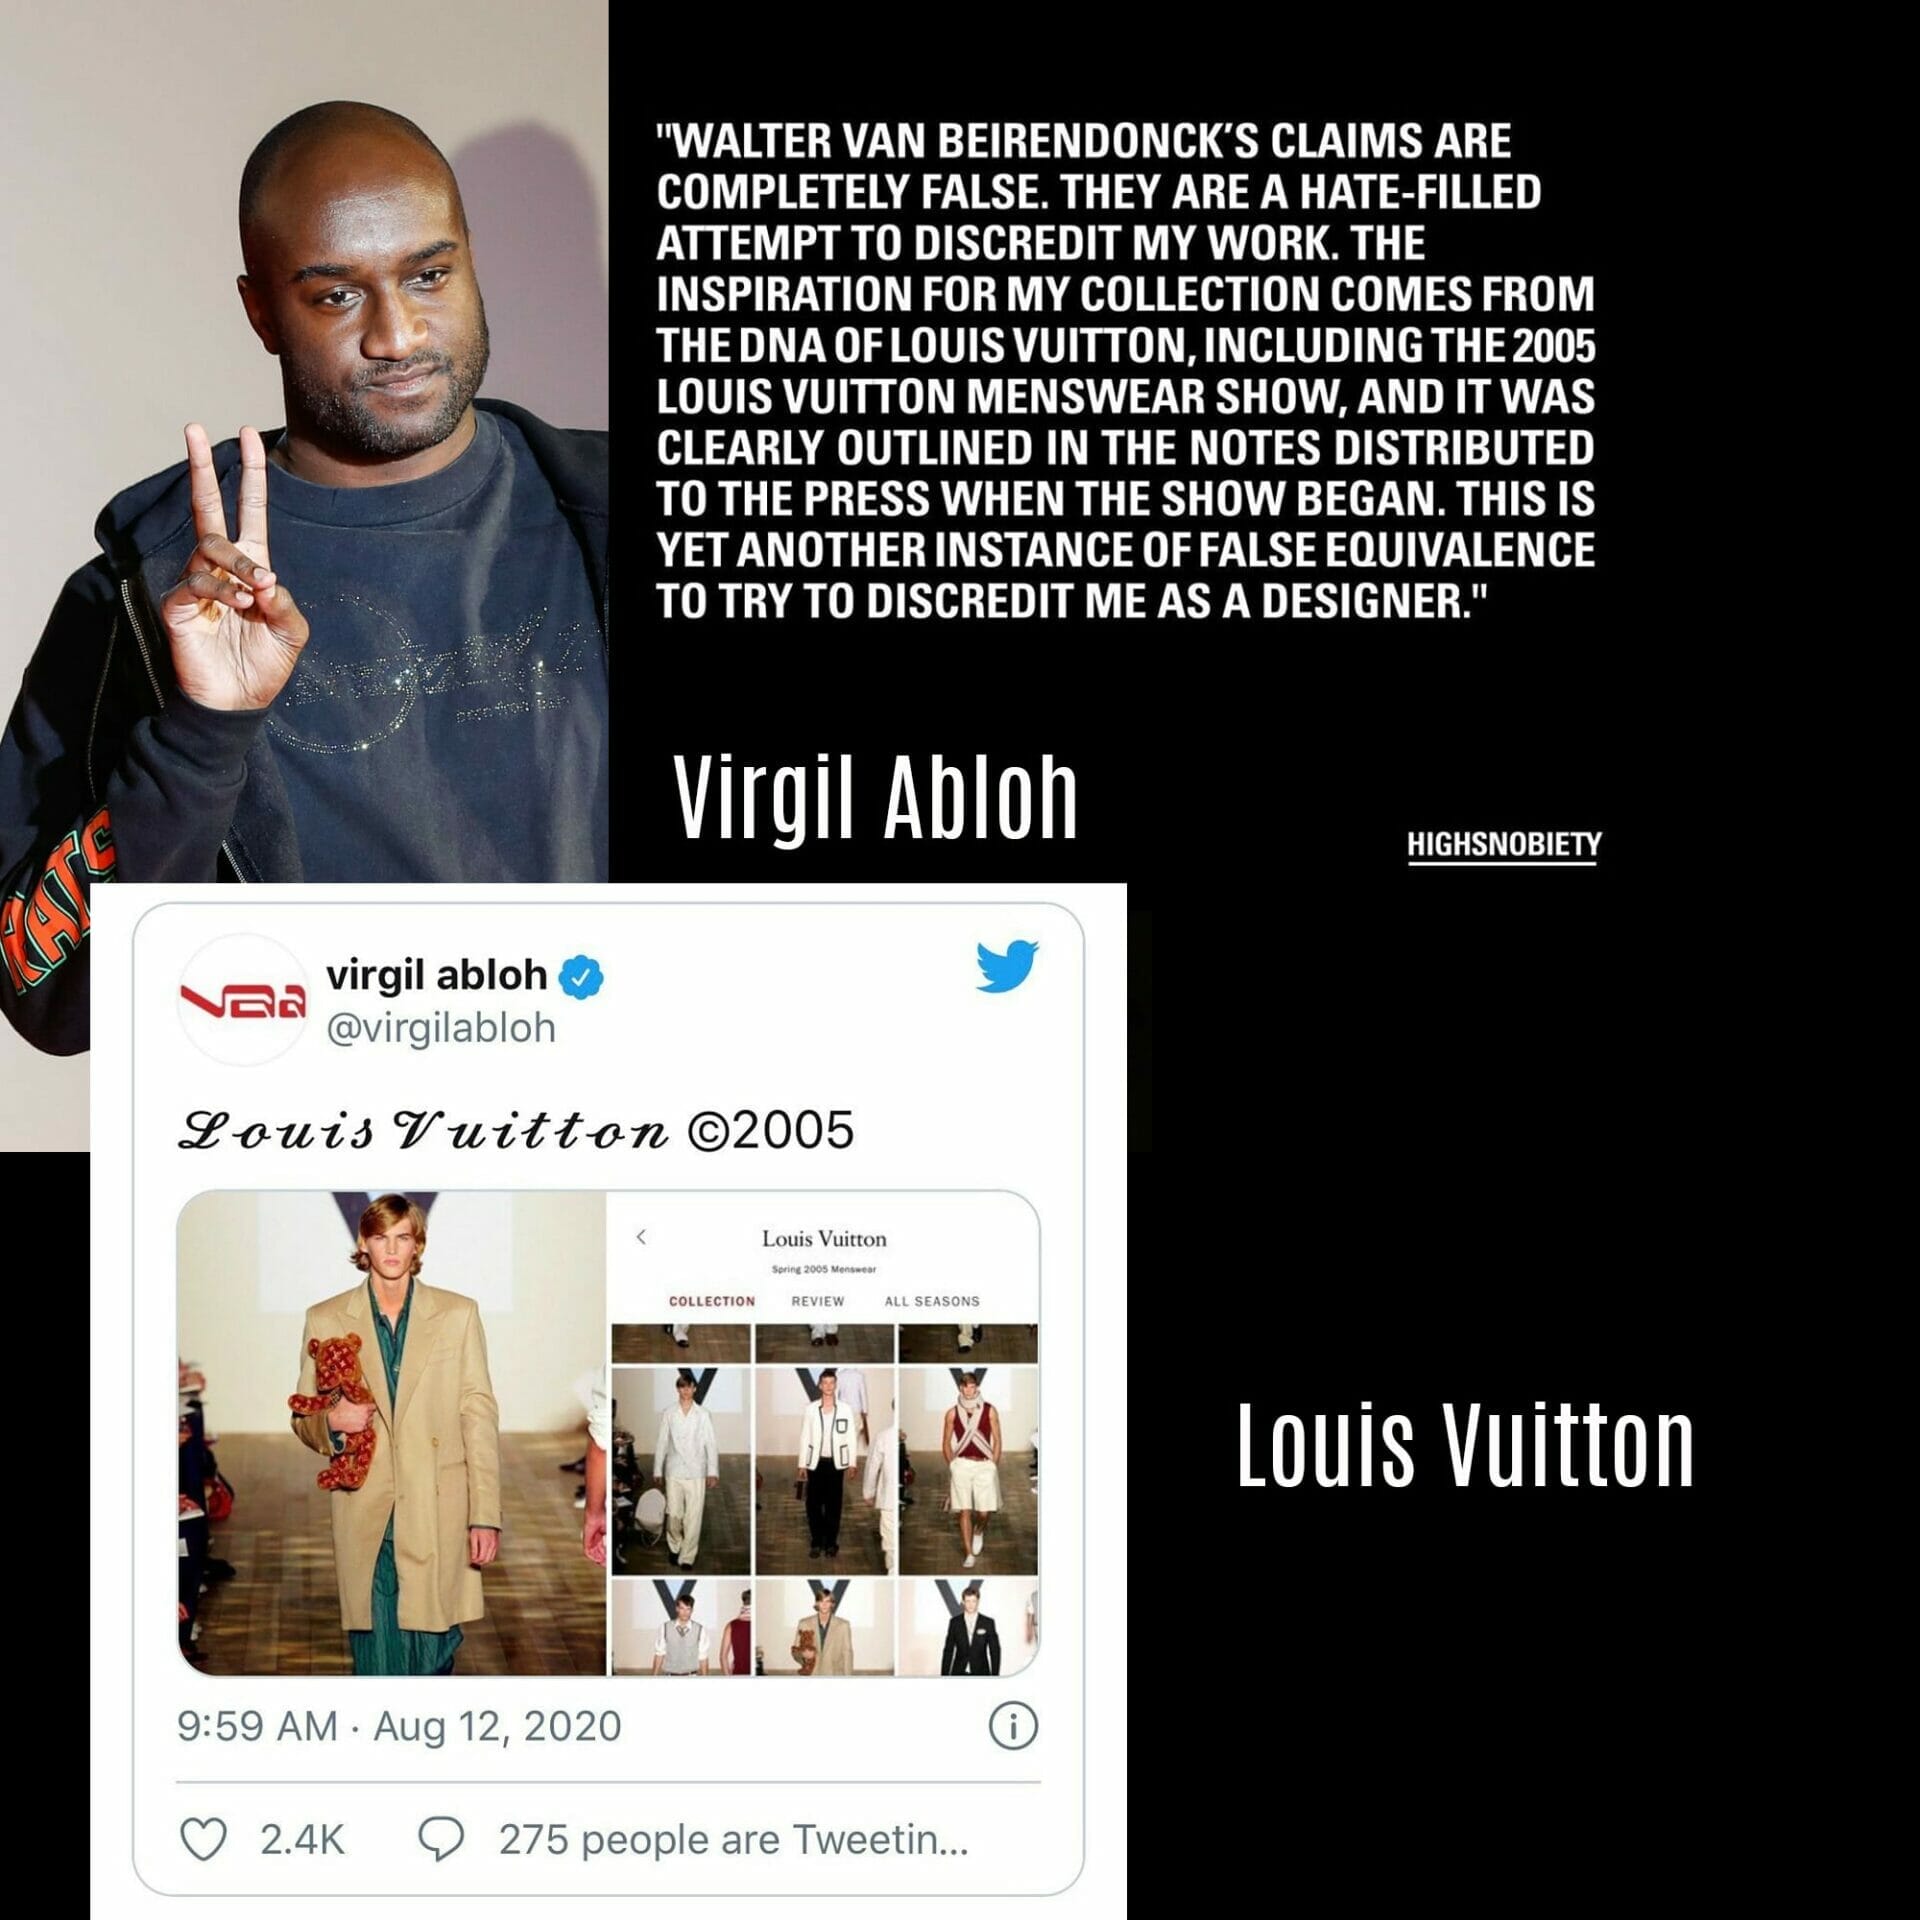 Virgil Abloh Responds to Walter Van Beirendonck Plagiarism Claims